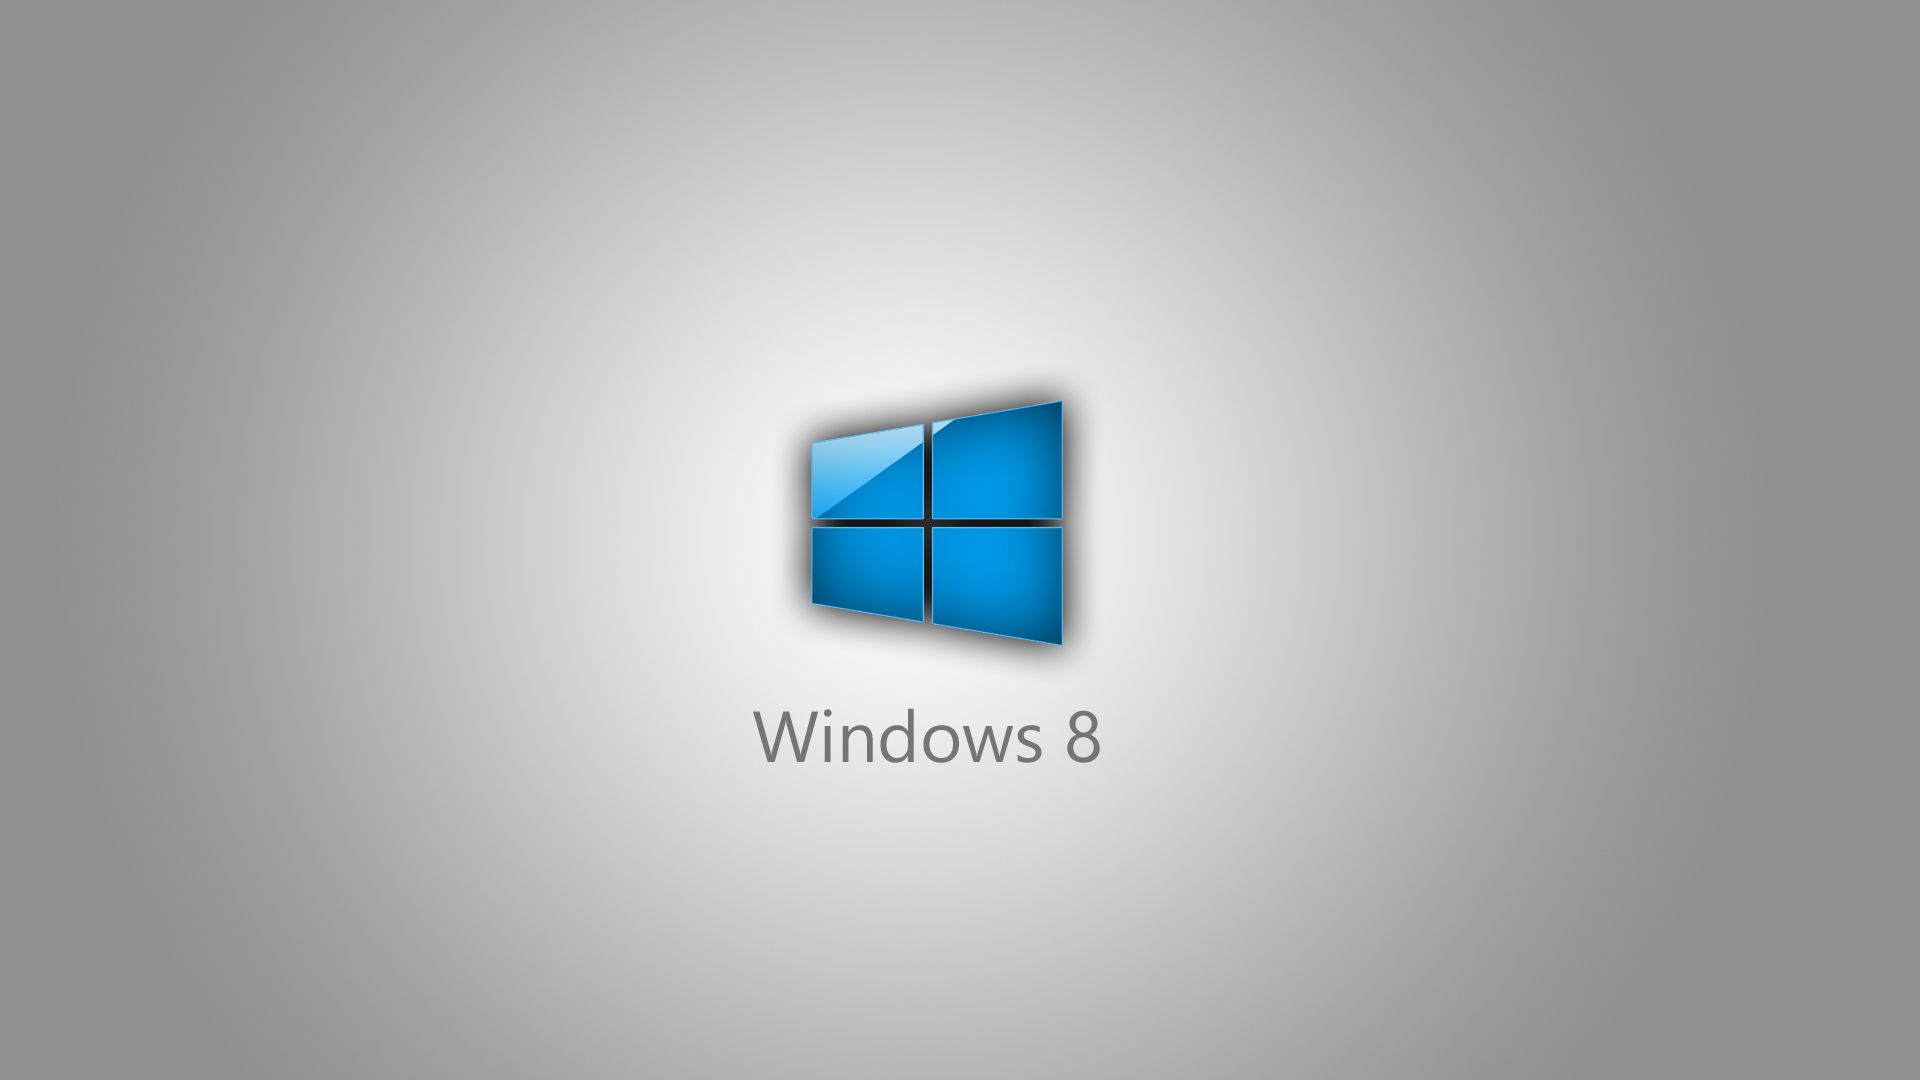 Windows 8 wallpaper hd 1080p free download